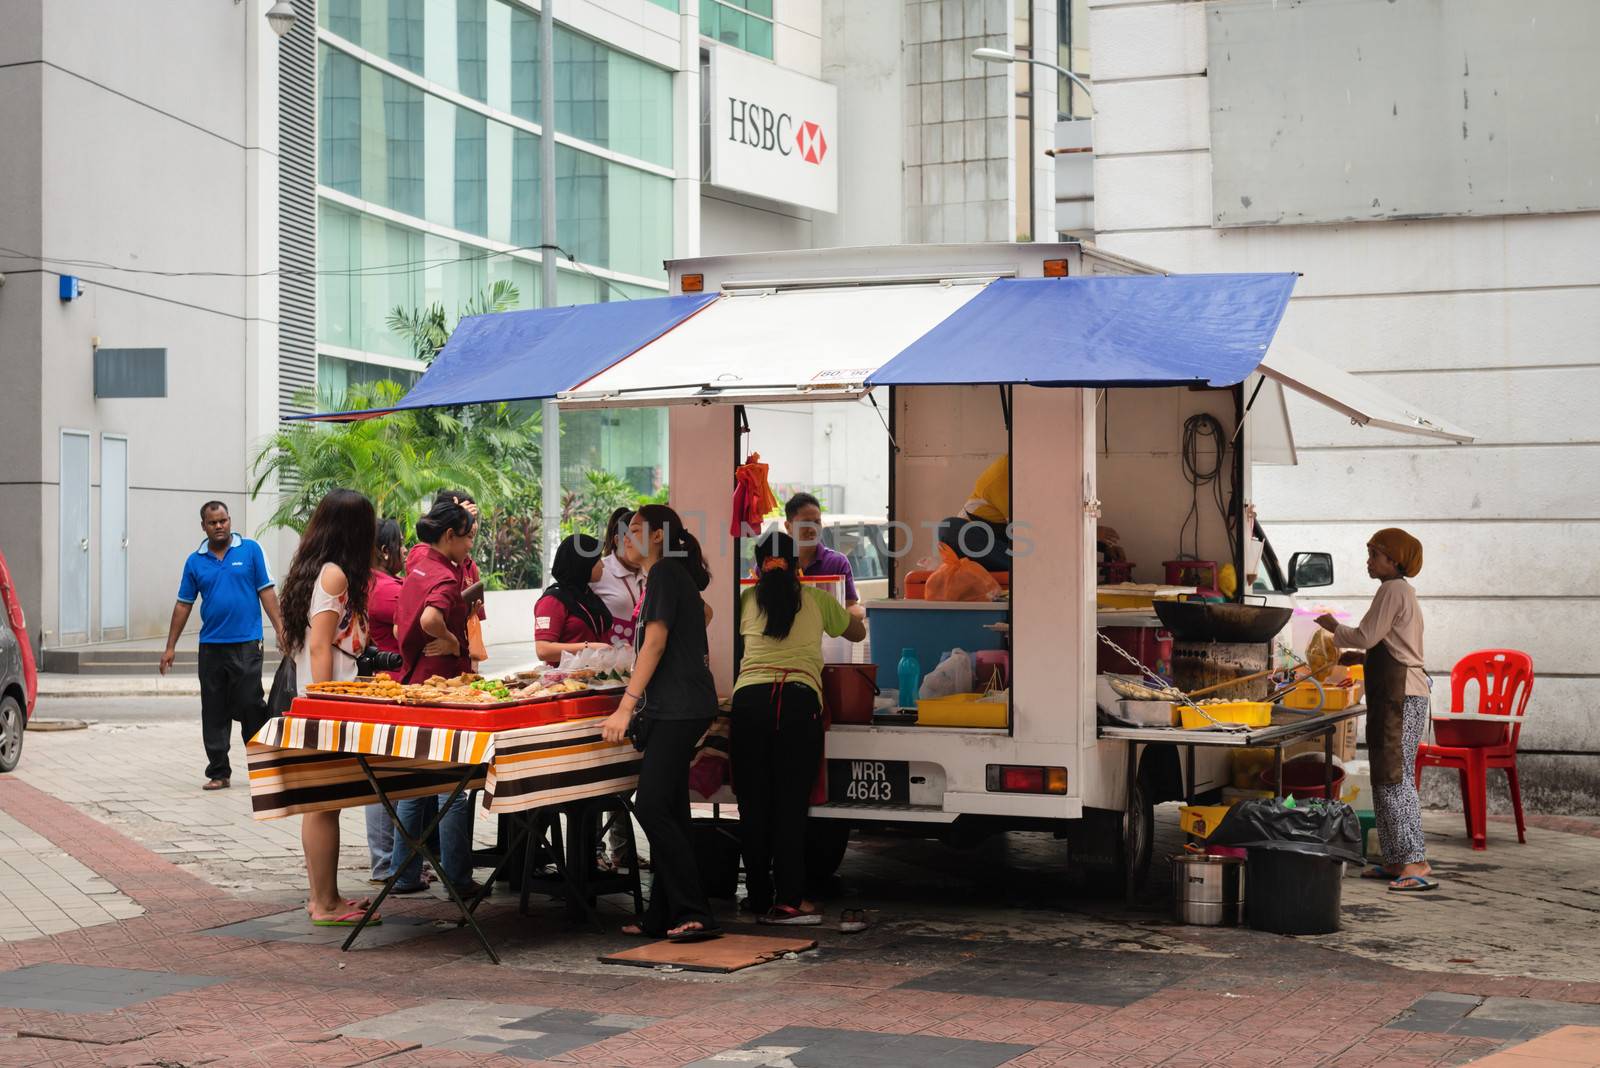 KUALA LUMPUR - JUN 15: Mobile vendor sell fast food on a street on Jun 15, 2013 in Kuala Lumpur, Malaysia. Street food is popular snack type in Asia. 